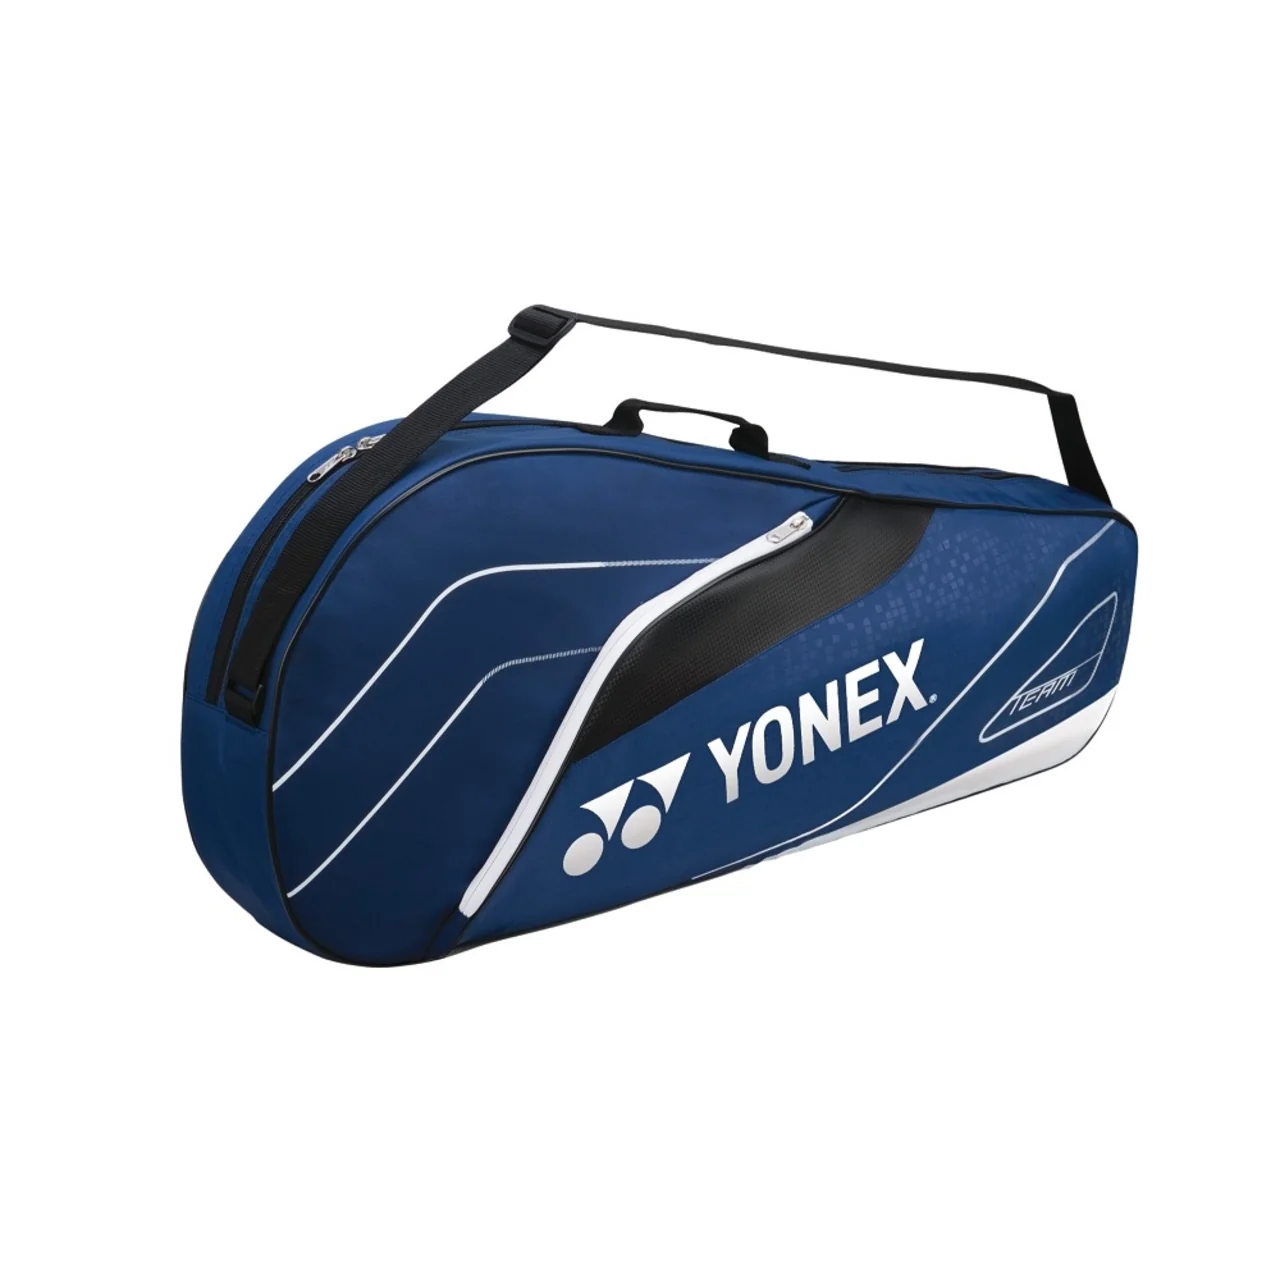 Yonex Team Bag x3 Greyish Blue